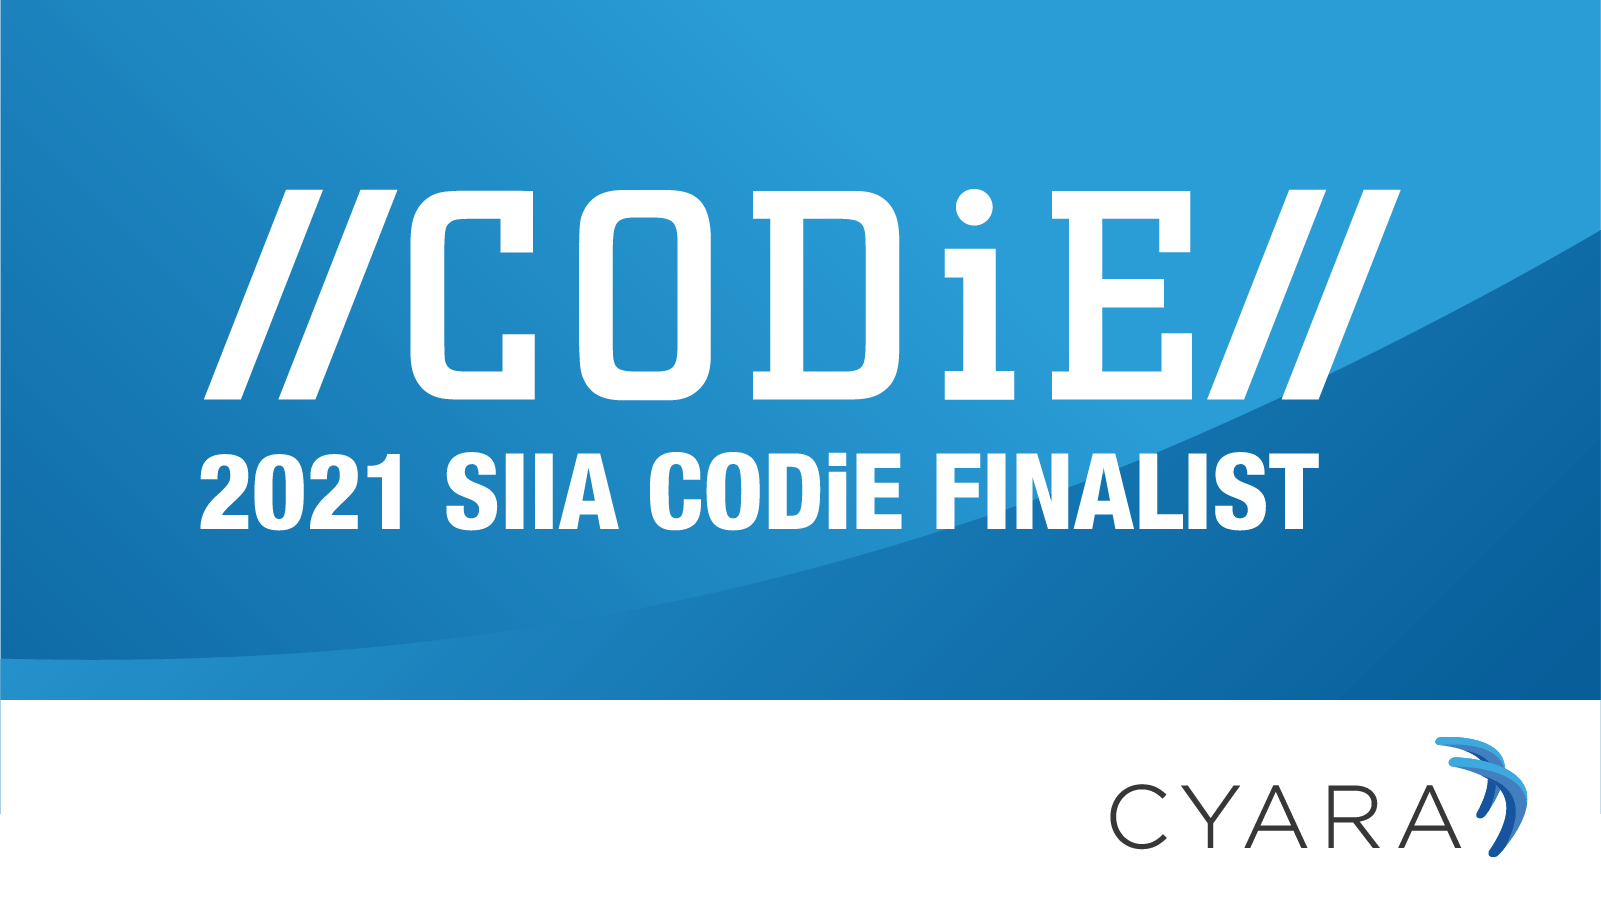 Cyara-2021 SIIA CODiE Finalist